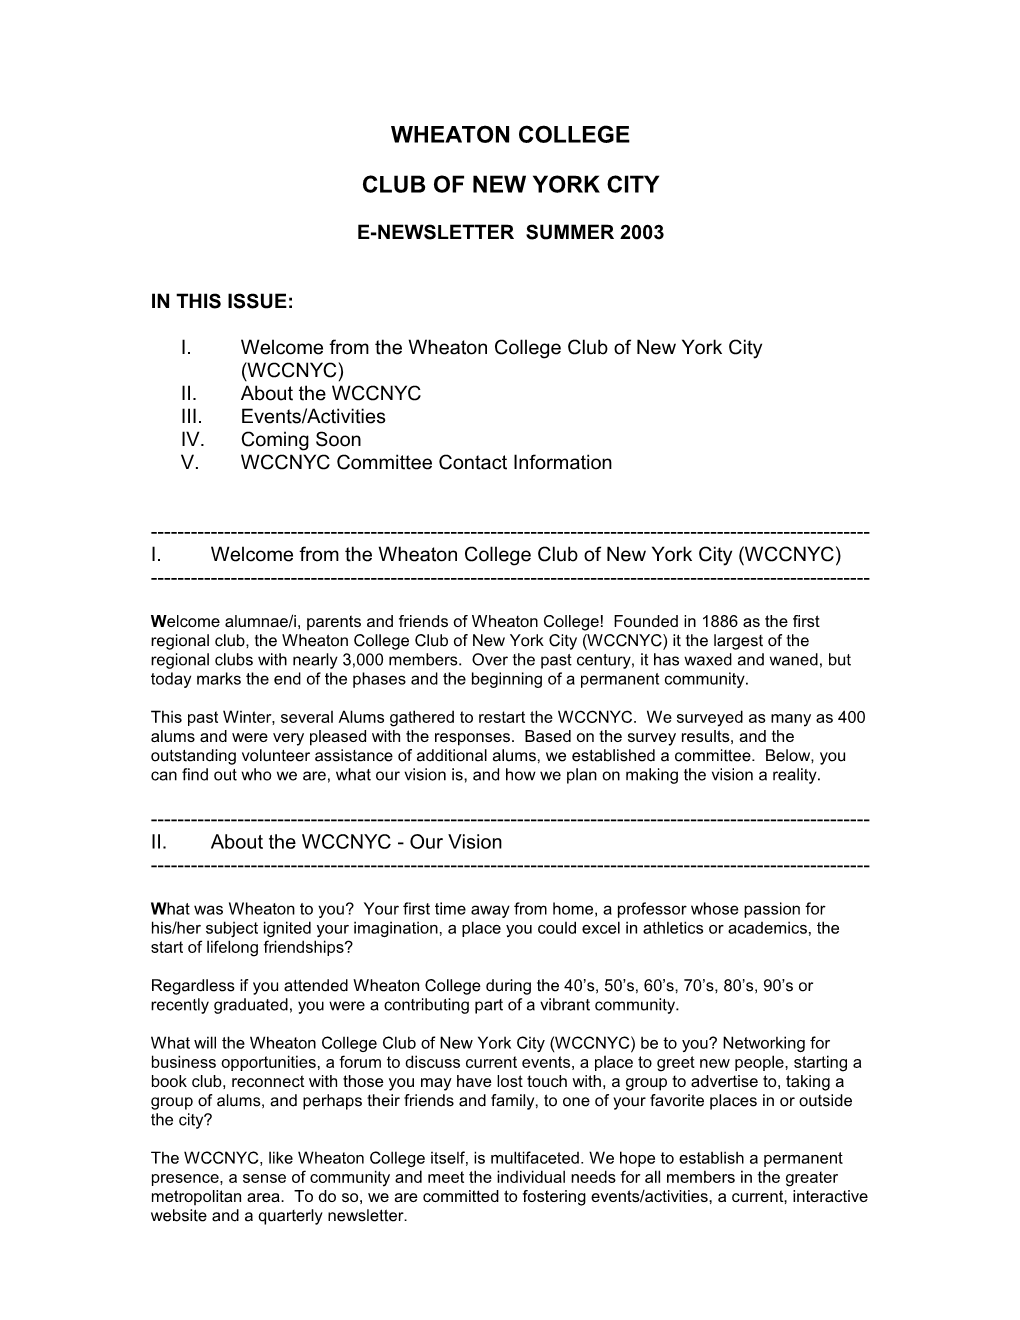 Club of New York City